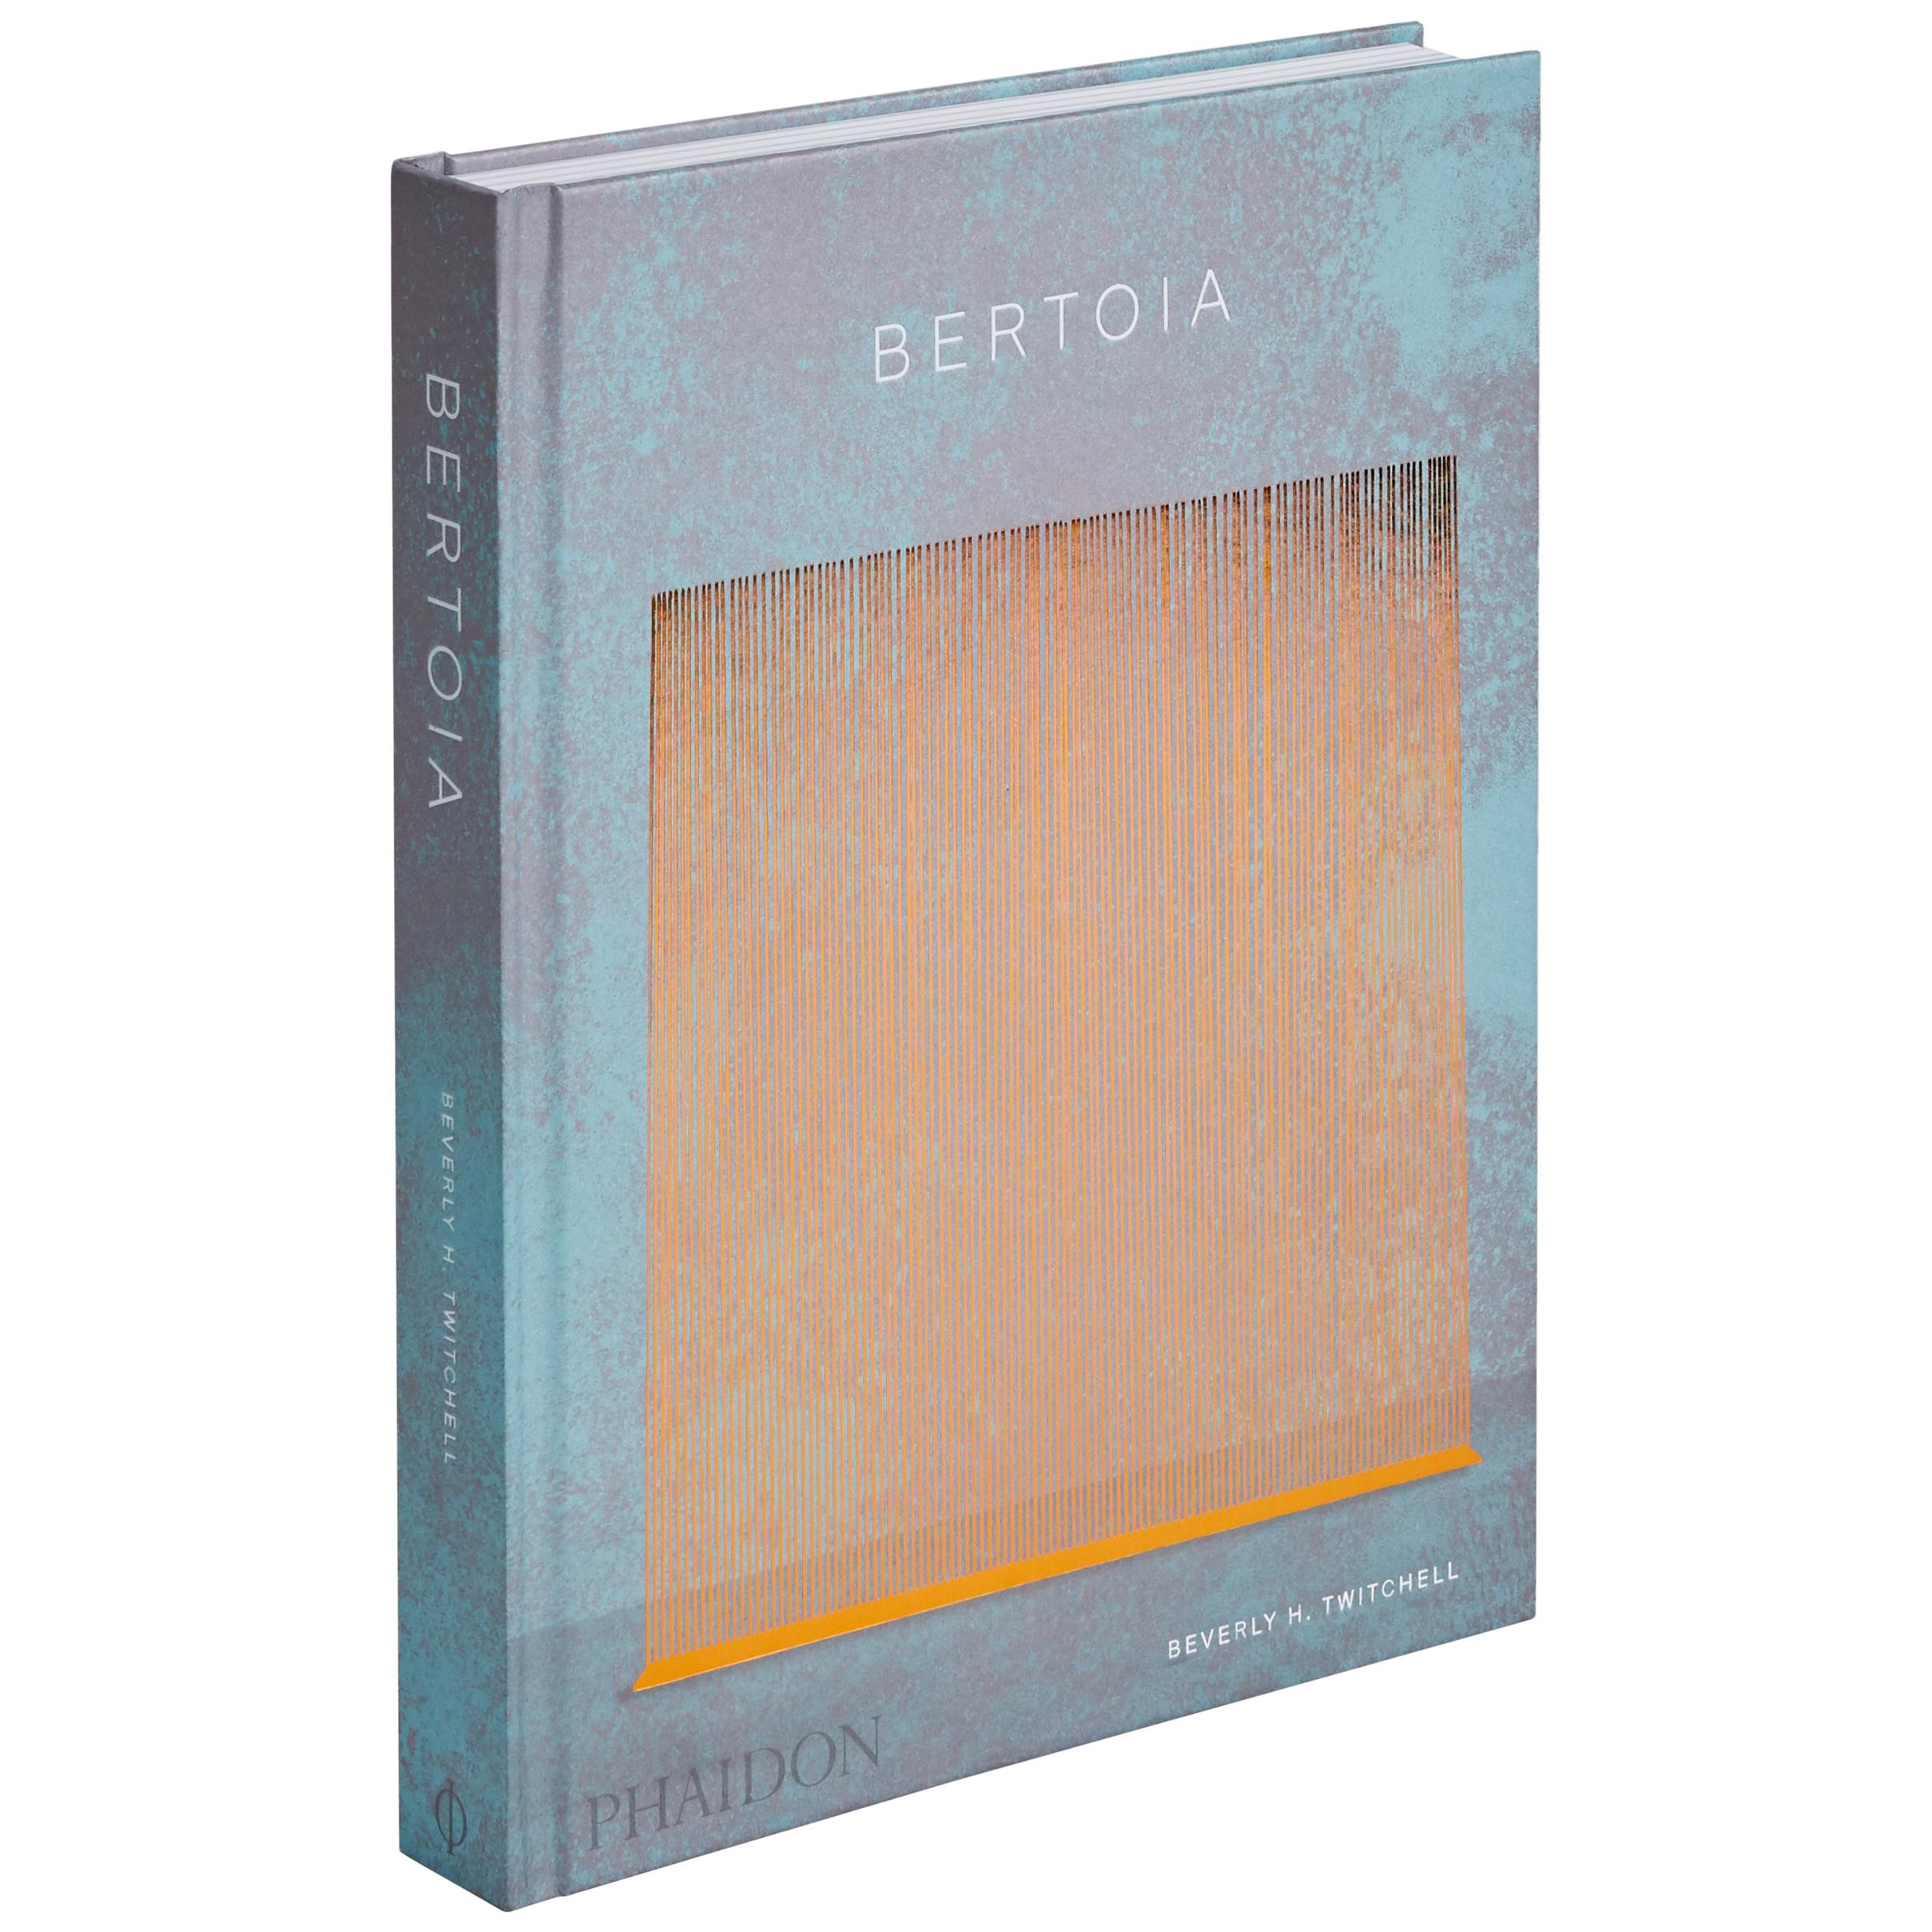 Bertoia, The Metal Worker